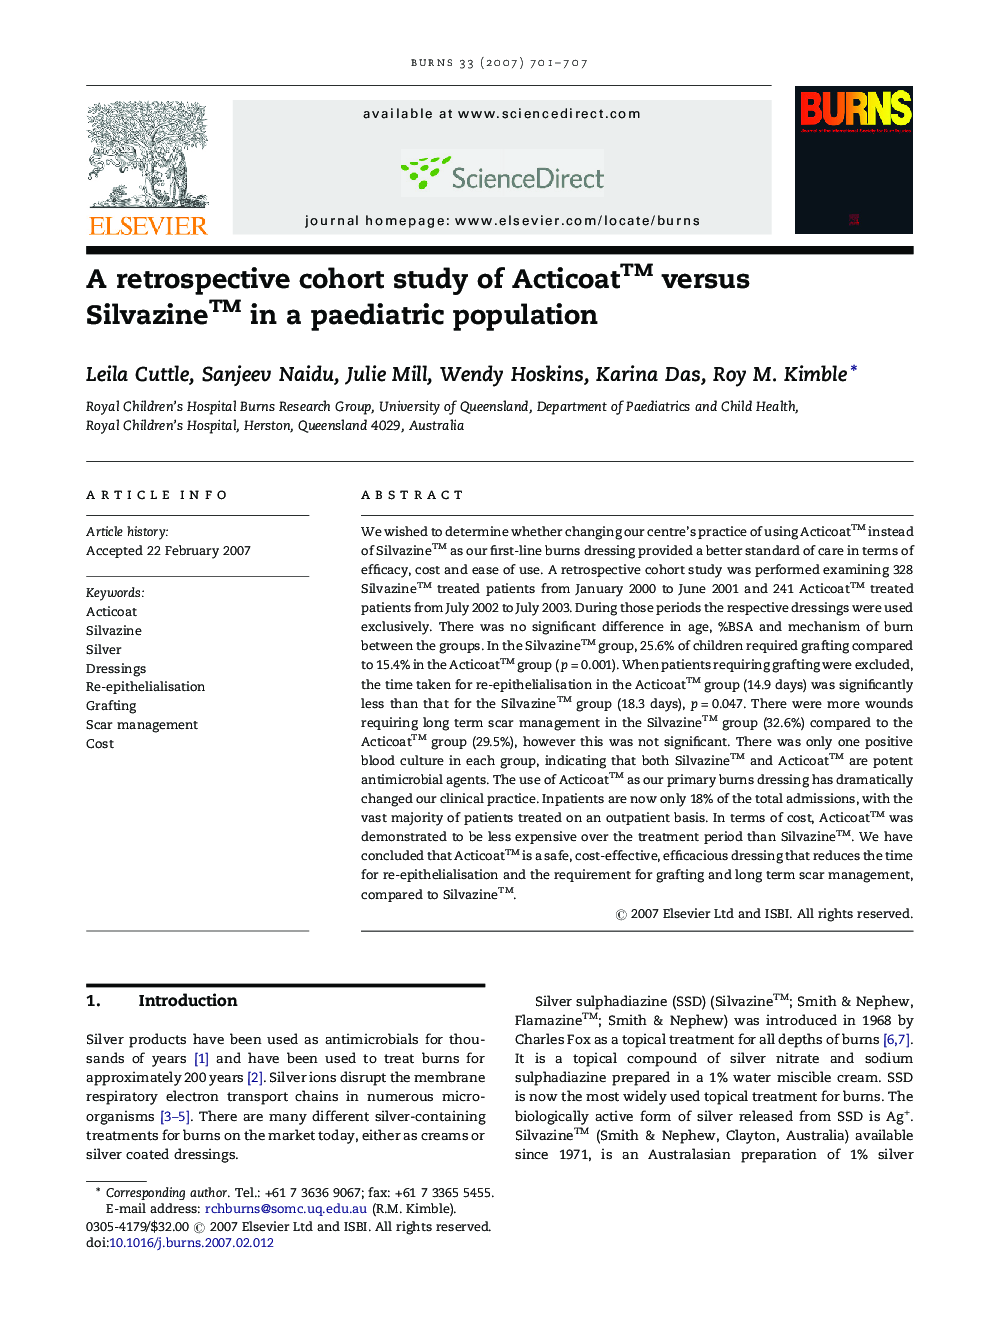 A retrospective cohort study of Acticoat™ versus Silvazine™ in a paediatric population